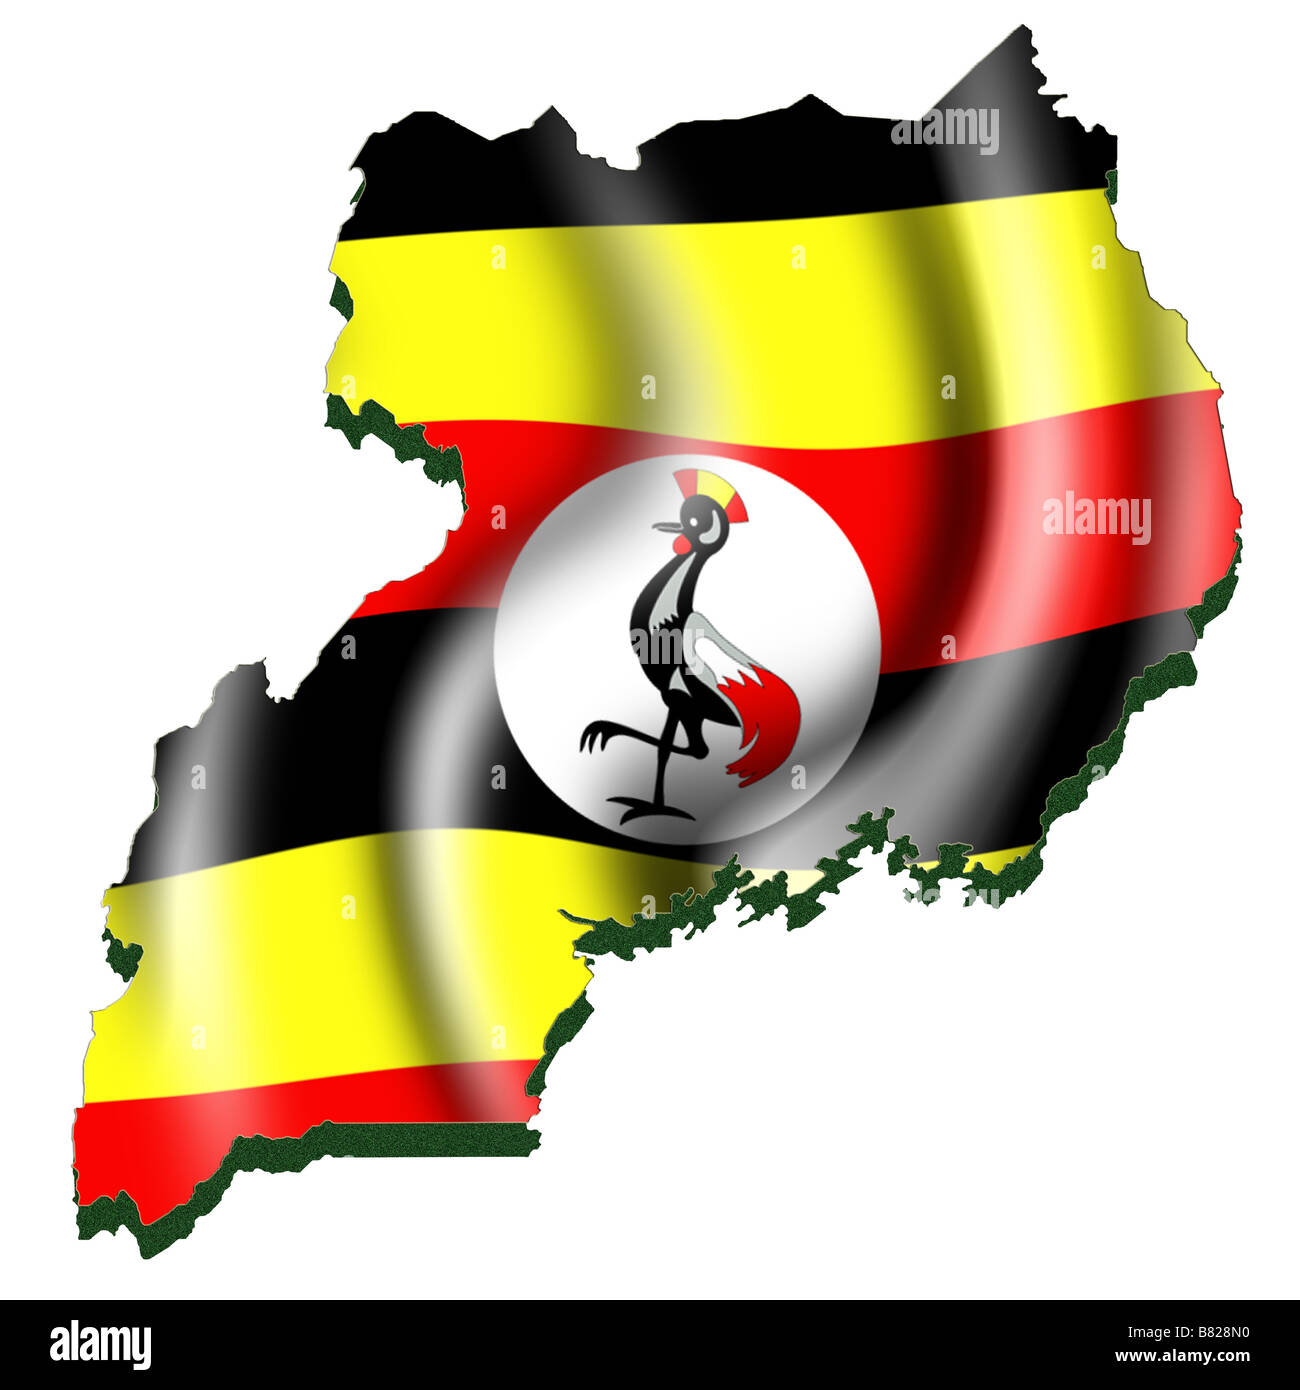 Outline map and flag of Uganda Stock Photo